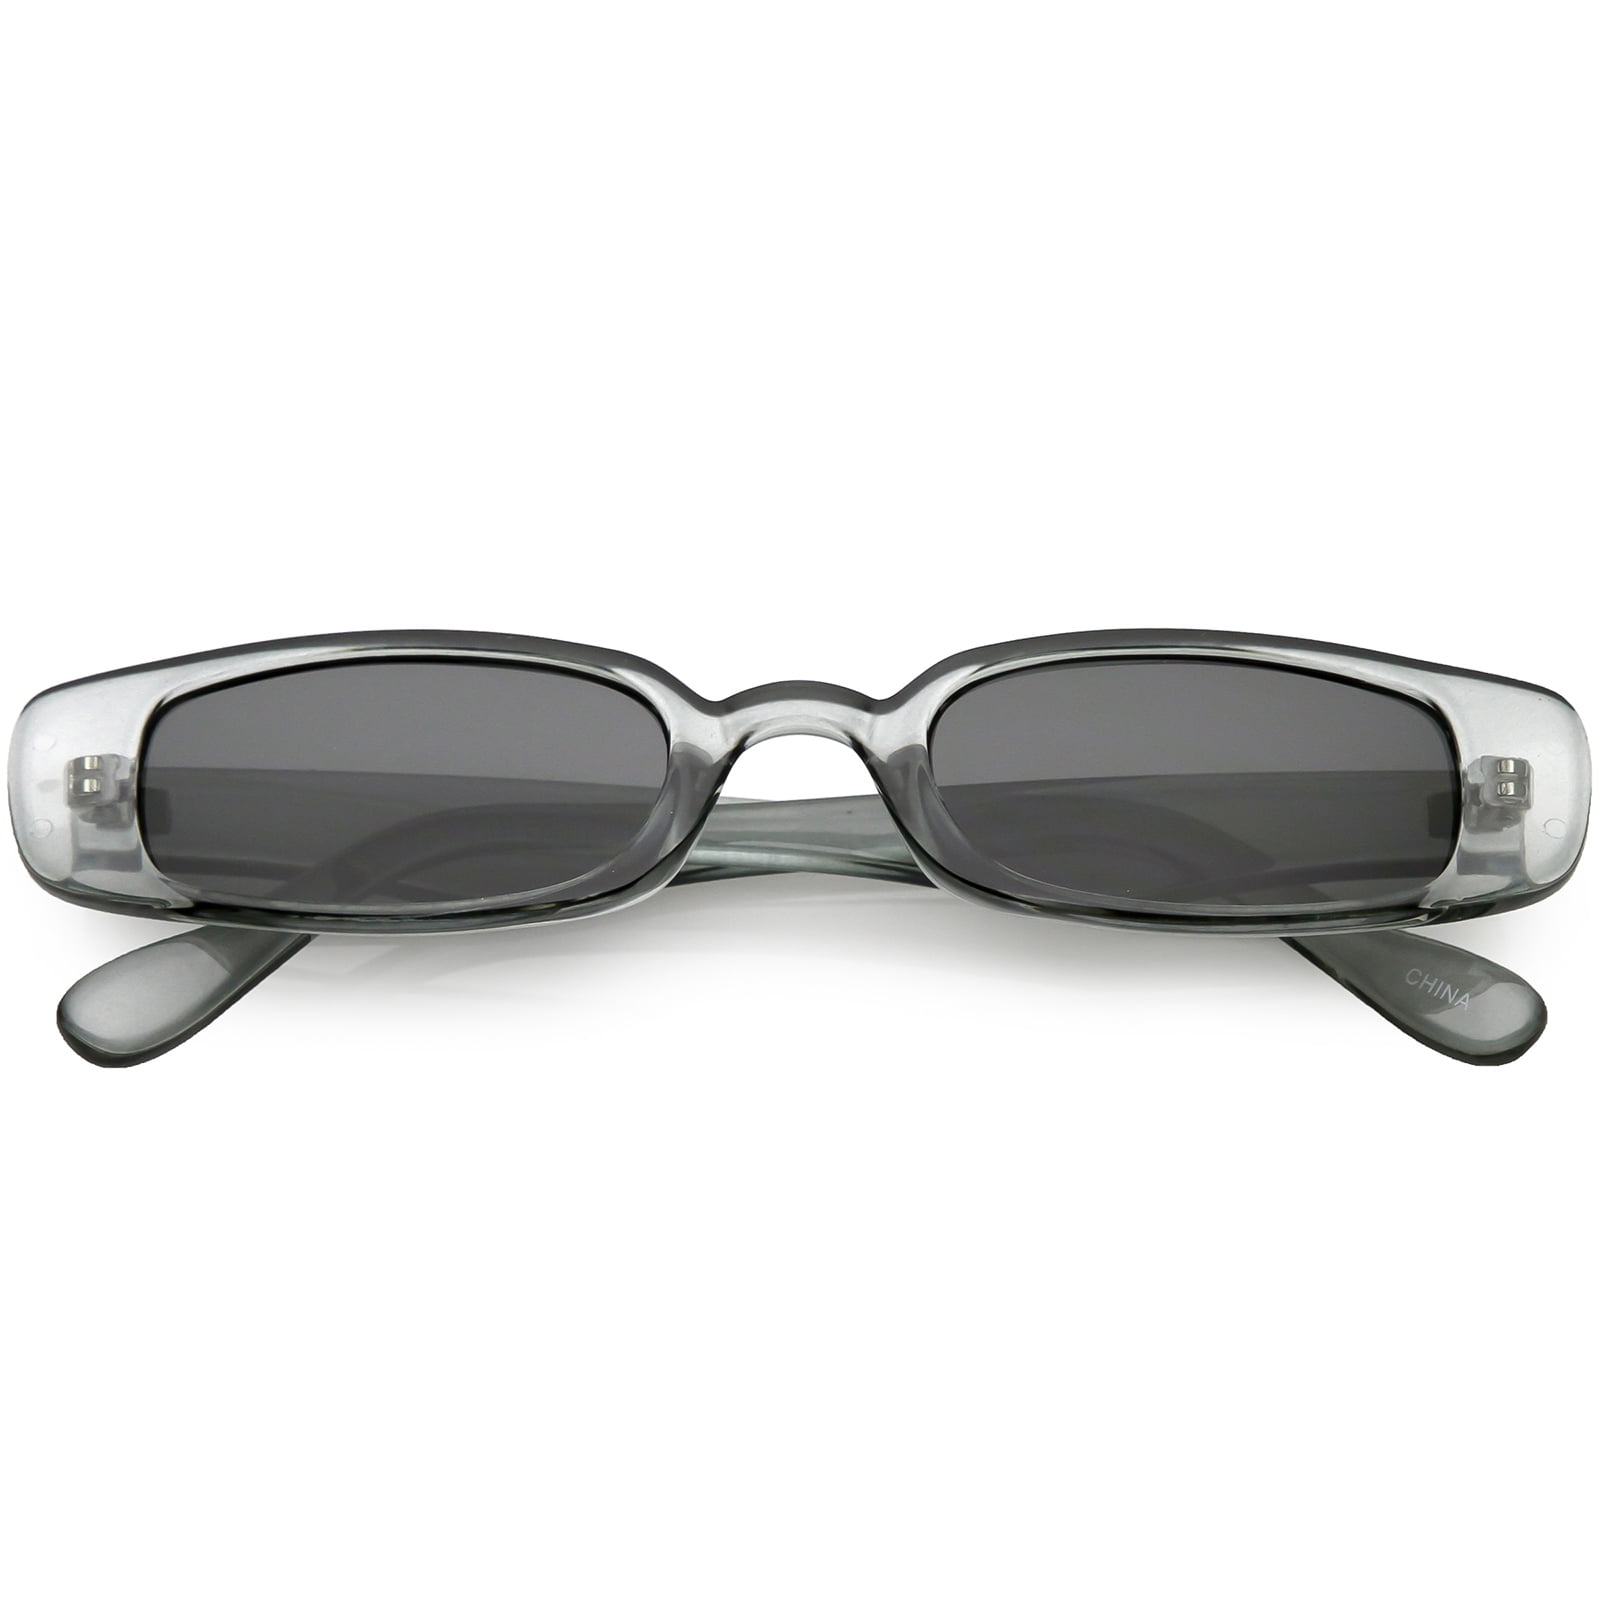 Discover 263+ thin frame sunglasses super hot